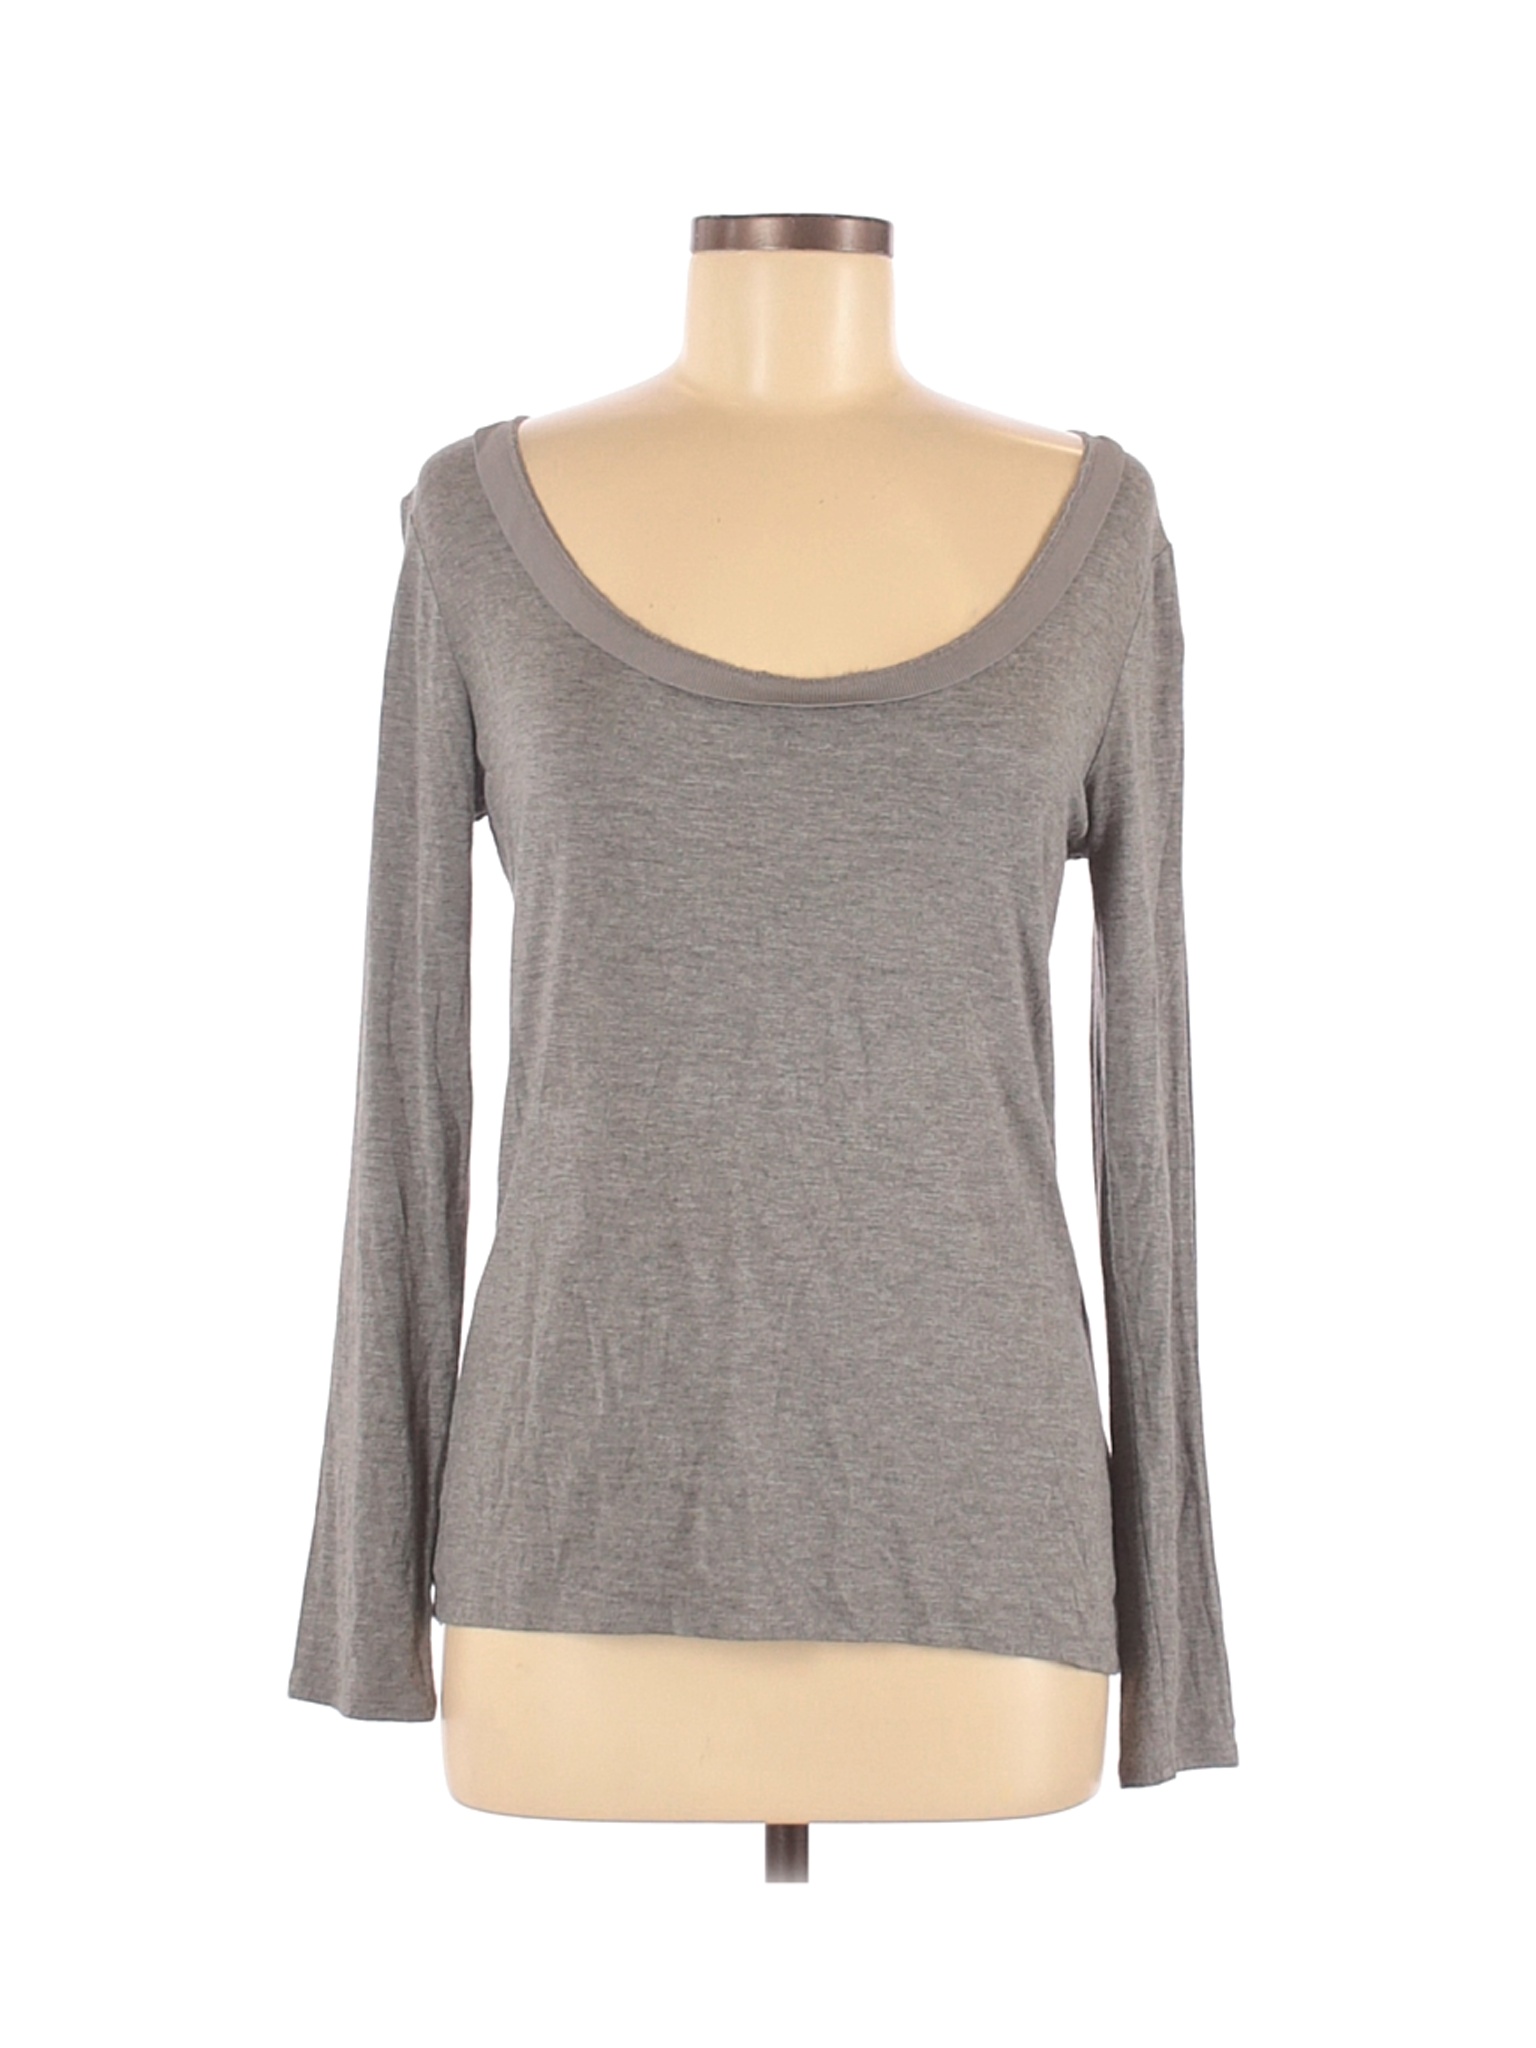 Tahari Women Gray Long Sleeve T-Shirt M | eBay